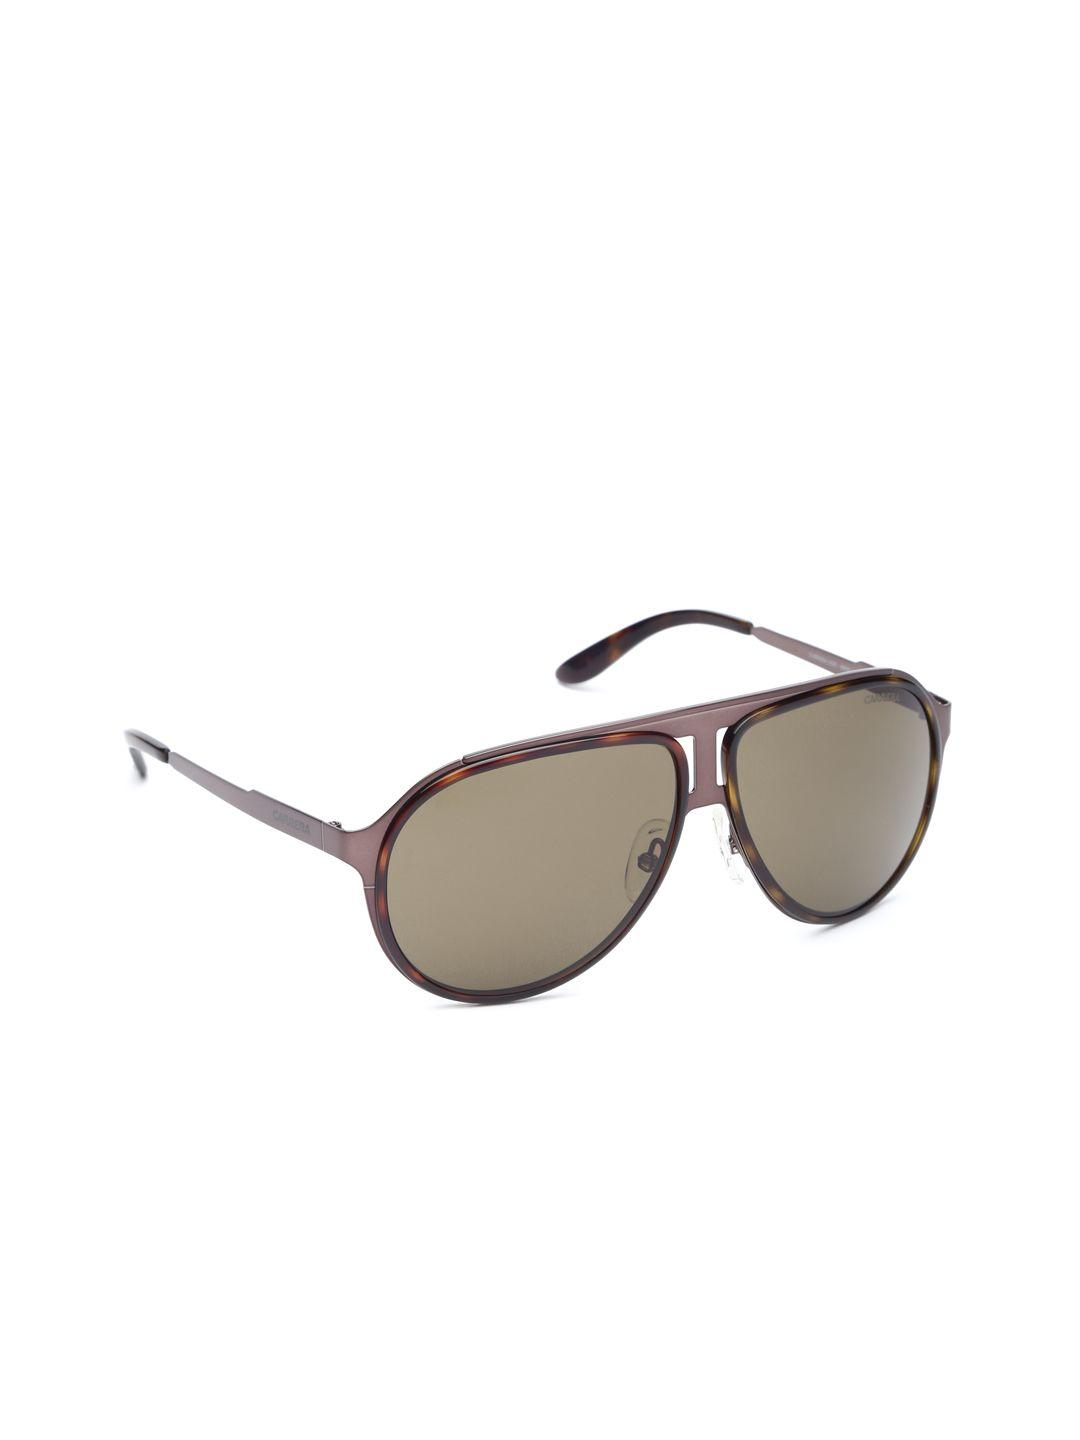 carrera women oval sunglasses 100/s hky 59ej